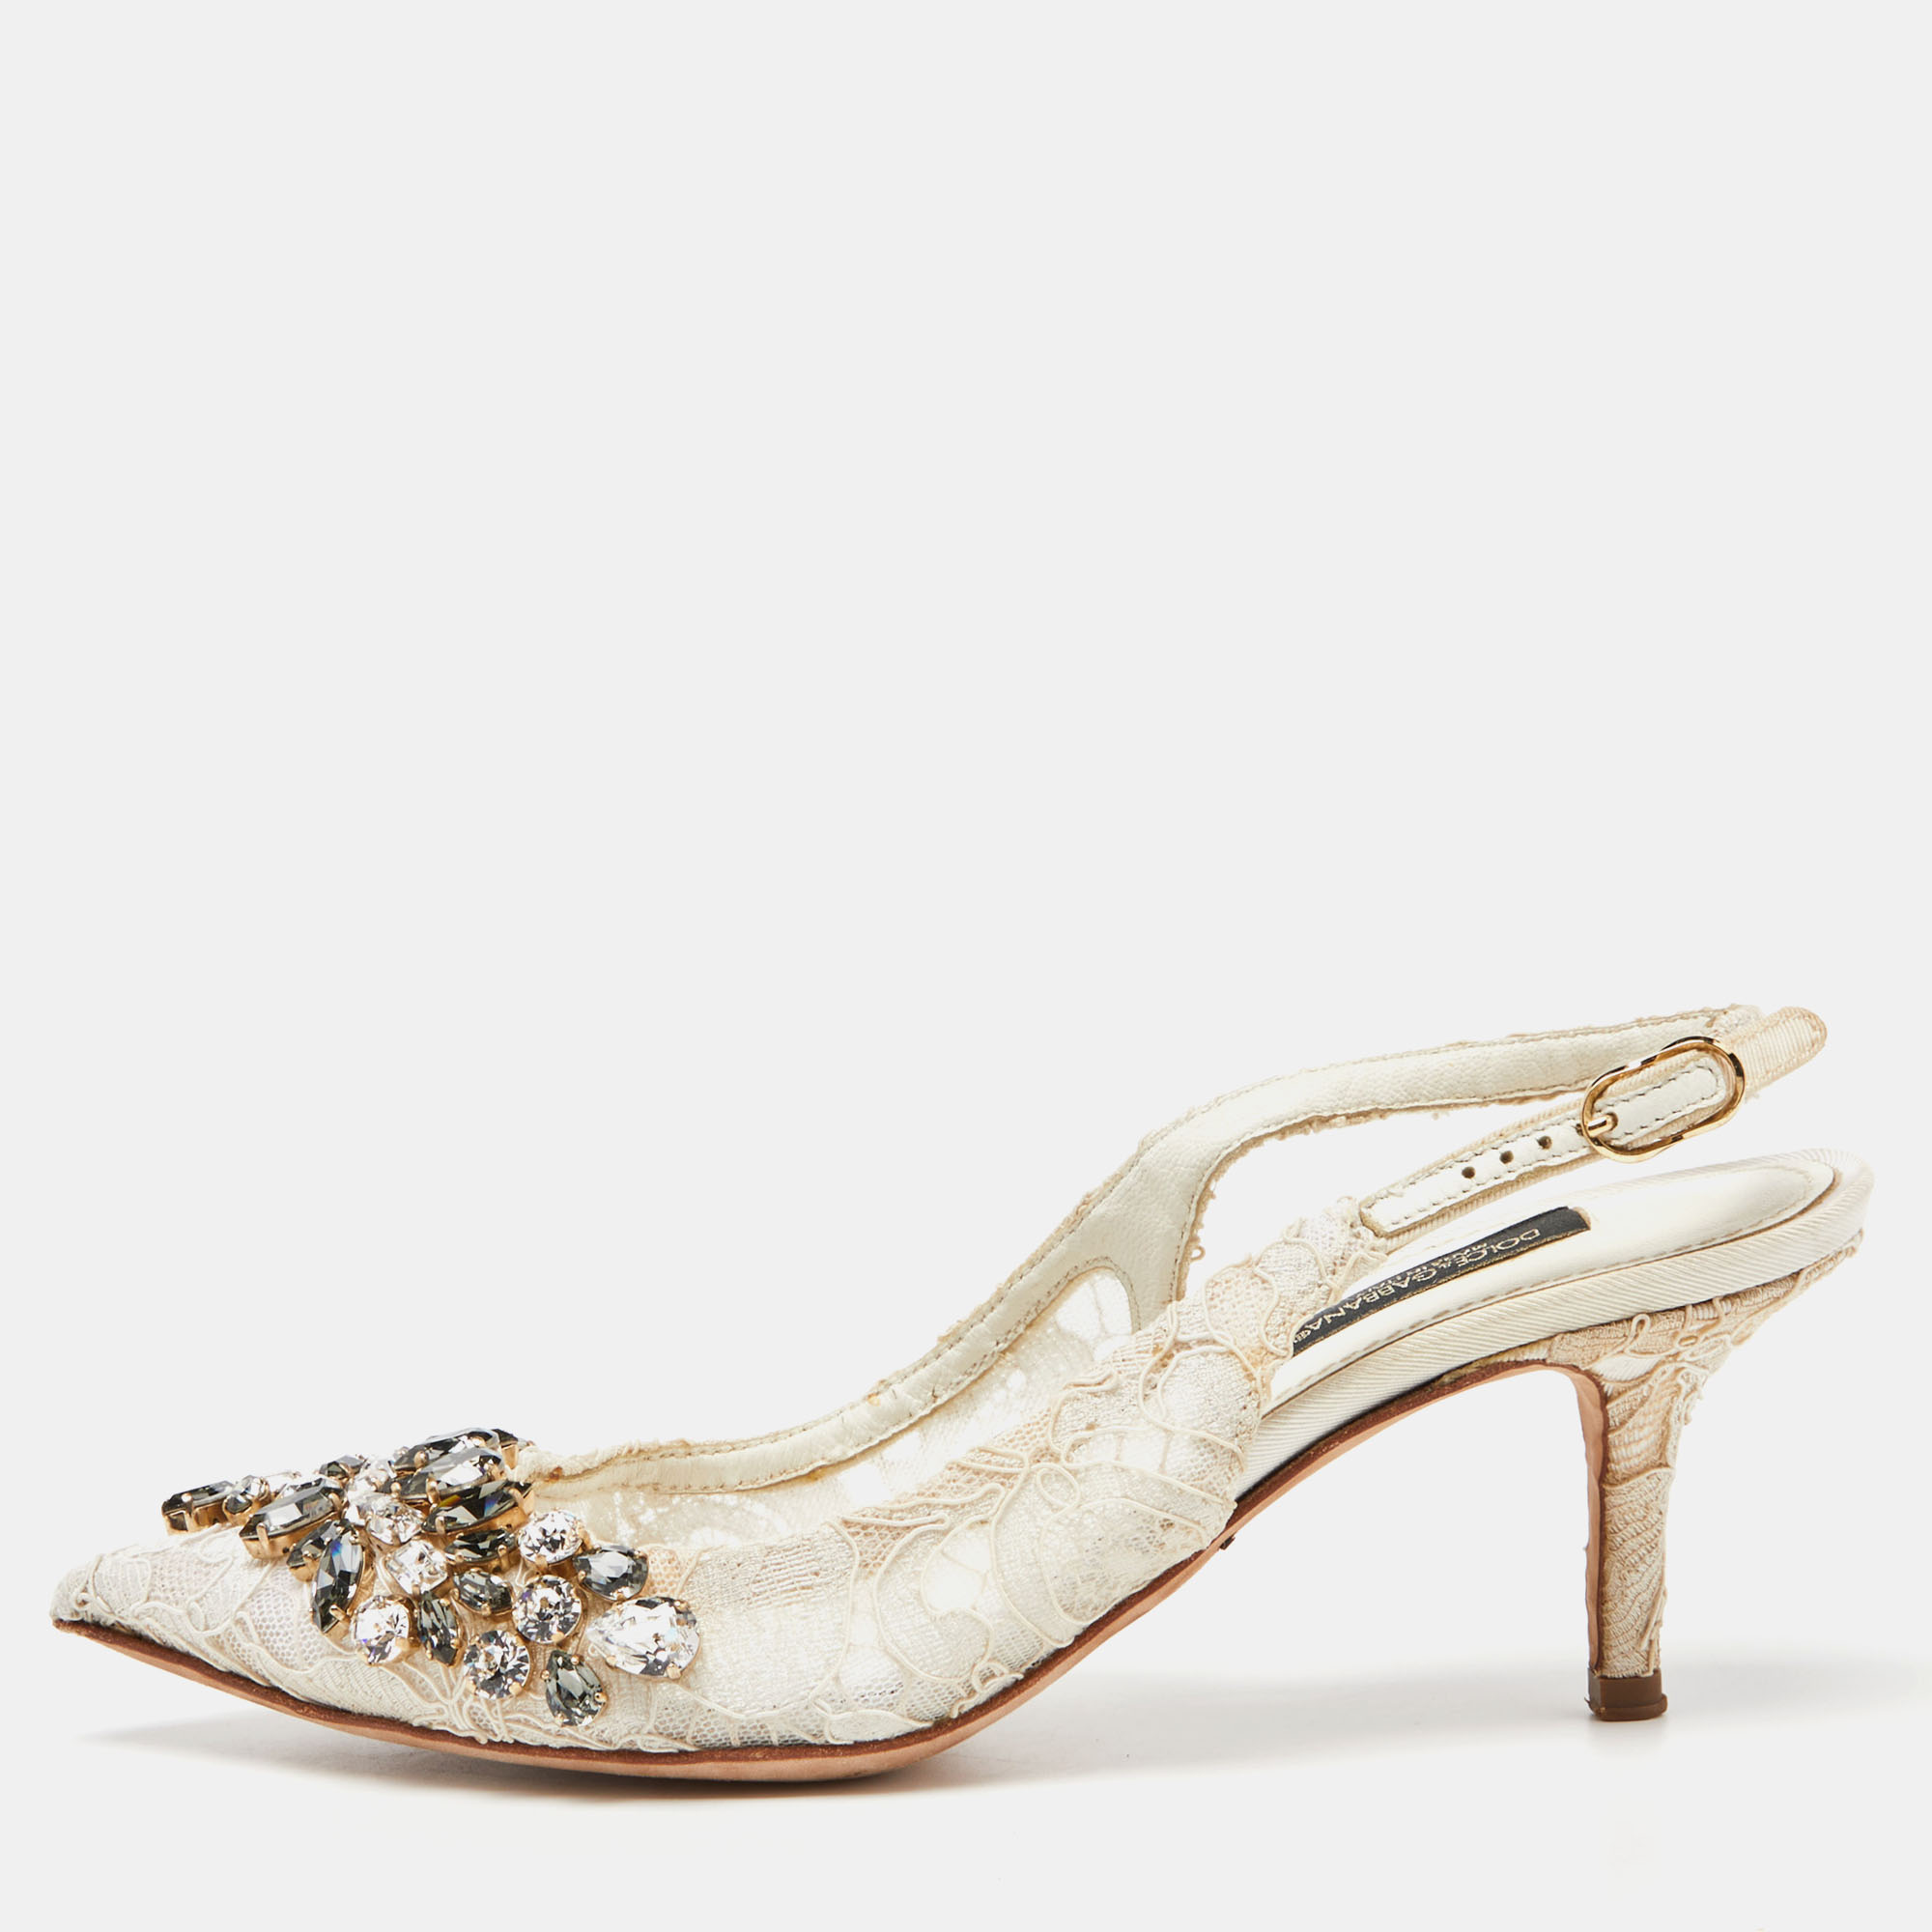 Dolce & gabbana white lace crystal embellished slingback sandals size 36